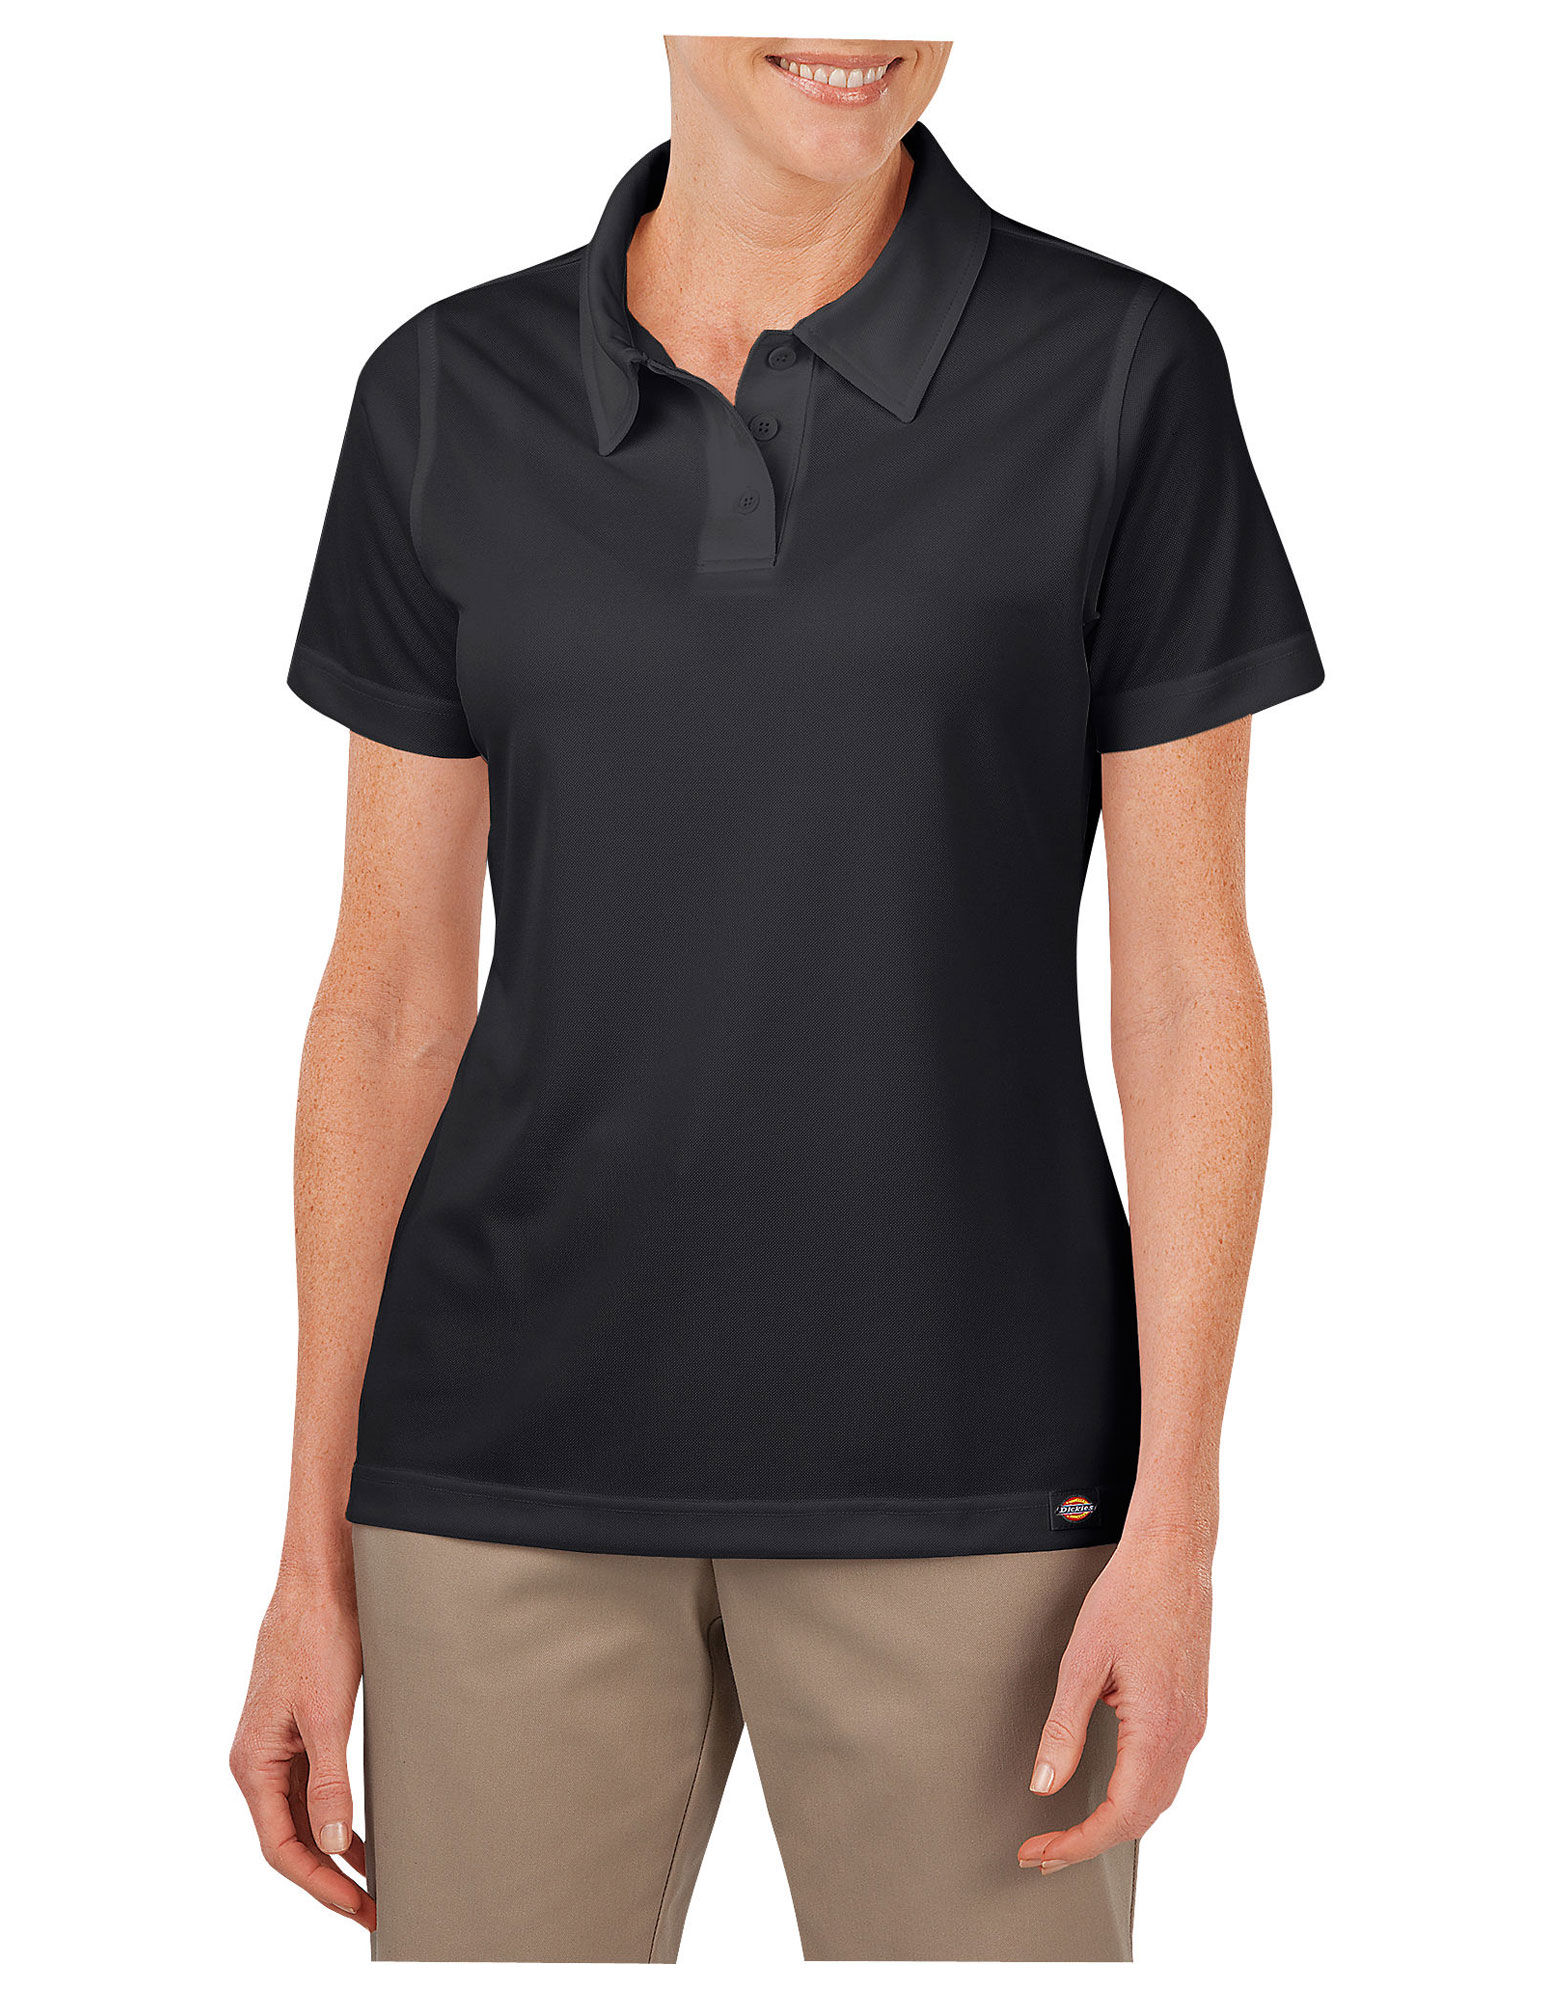 black short sleeve polo shirt womens